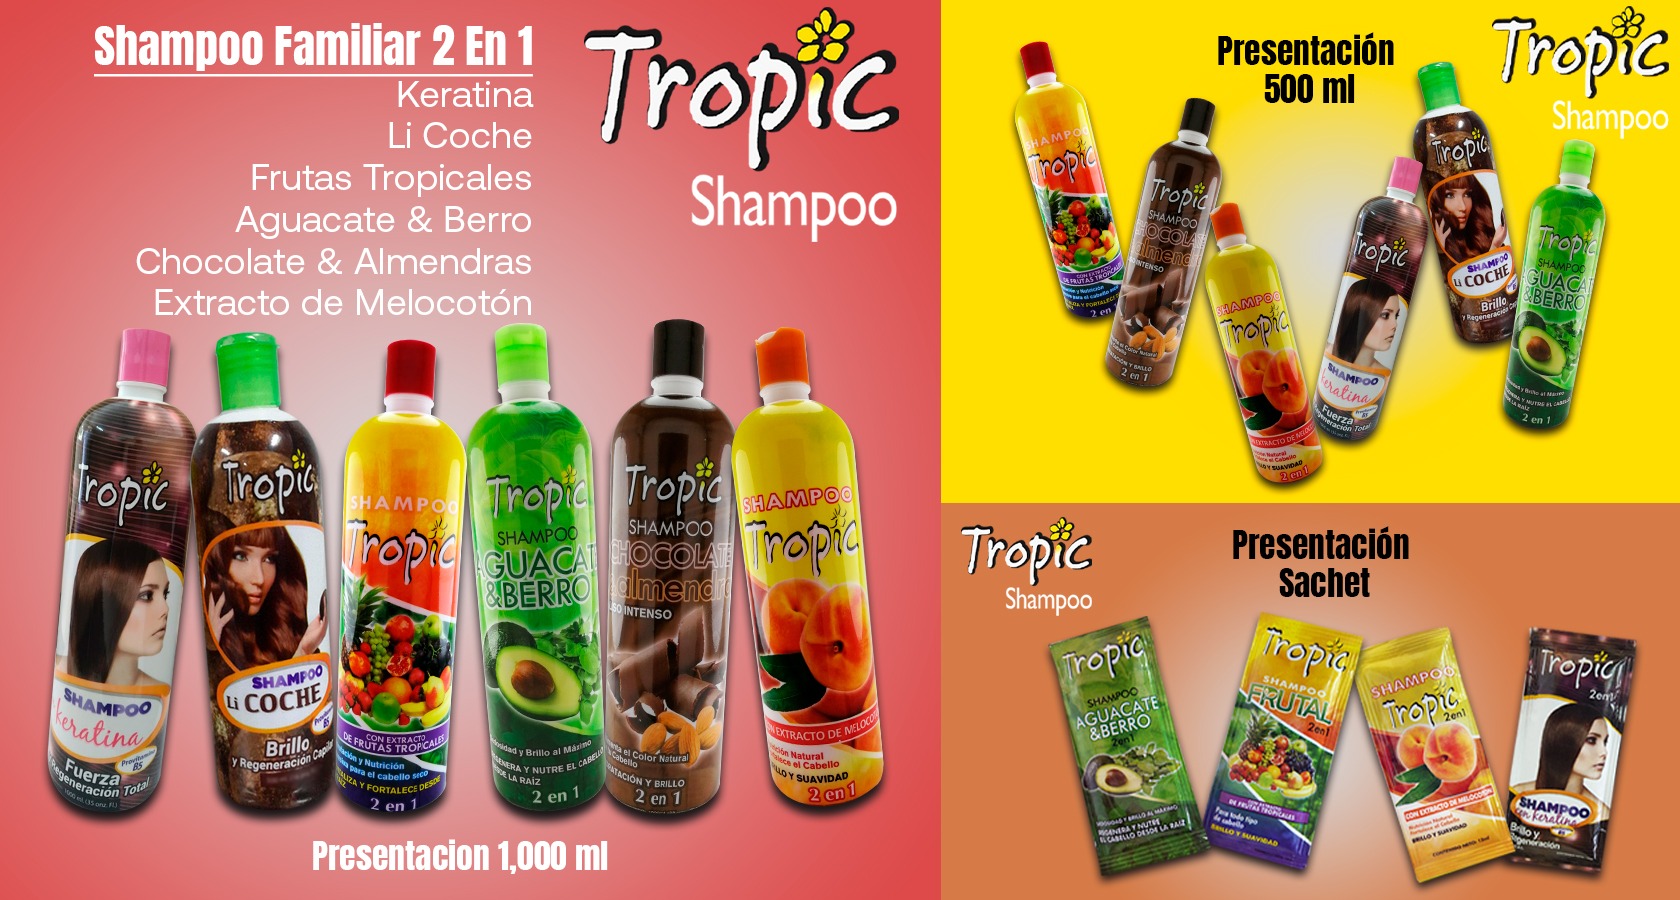 Portada Shampoo Tropic